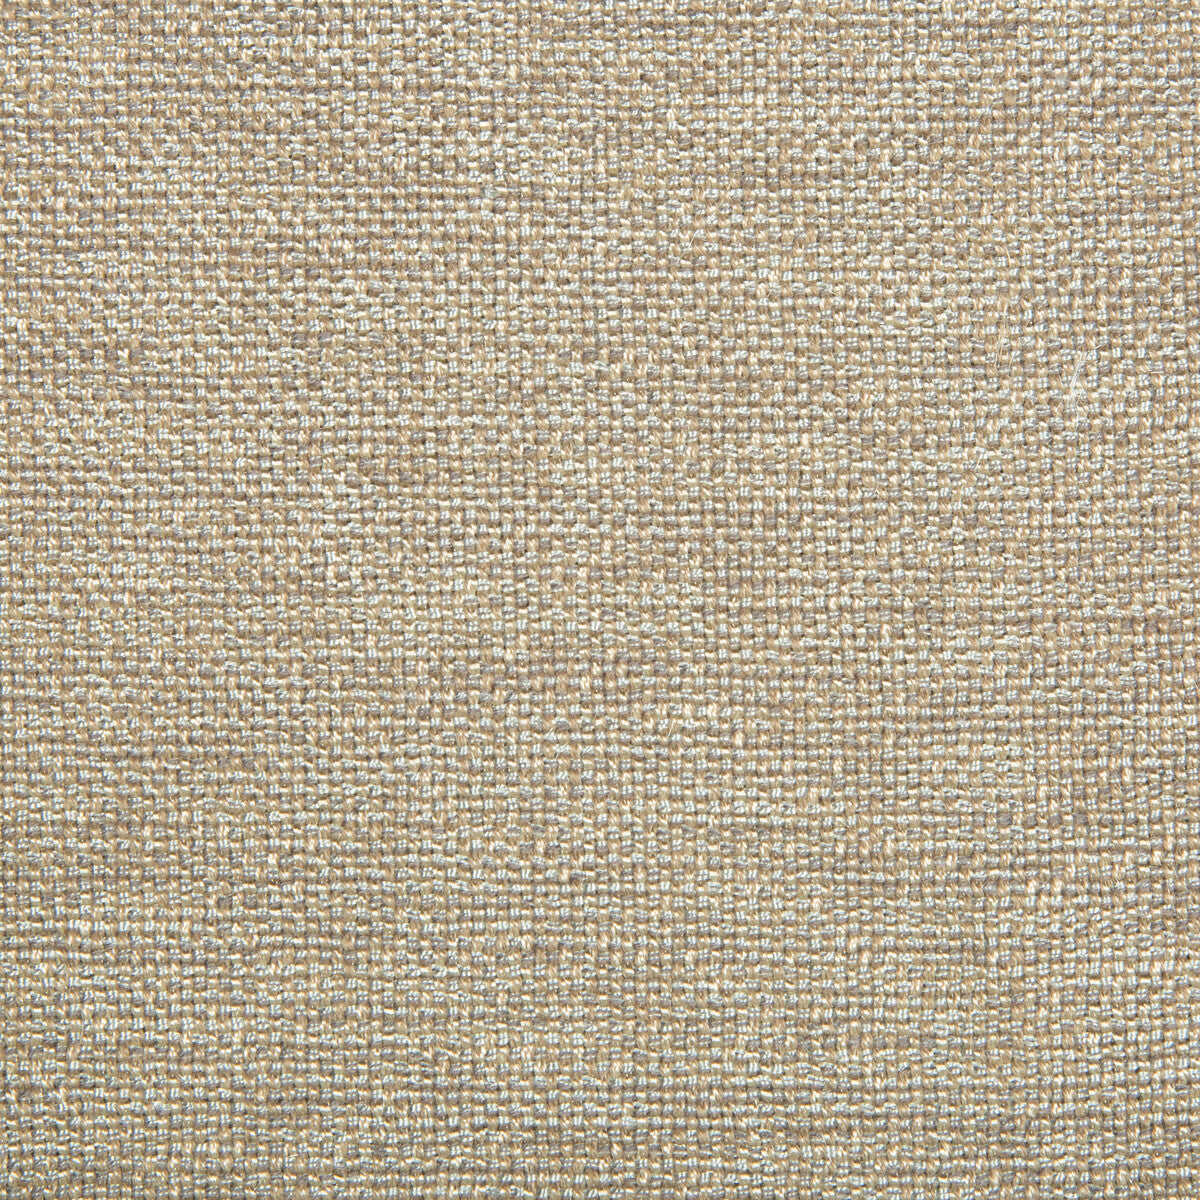 Kravet Smart fabric in 34939-1511 color - pattern 34939.1511.0 - by Kravet Smart